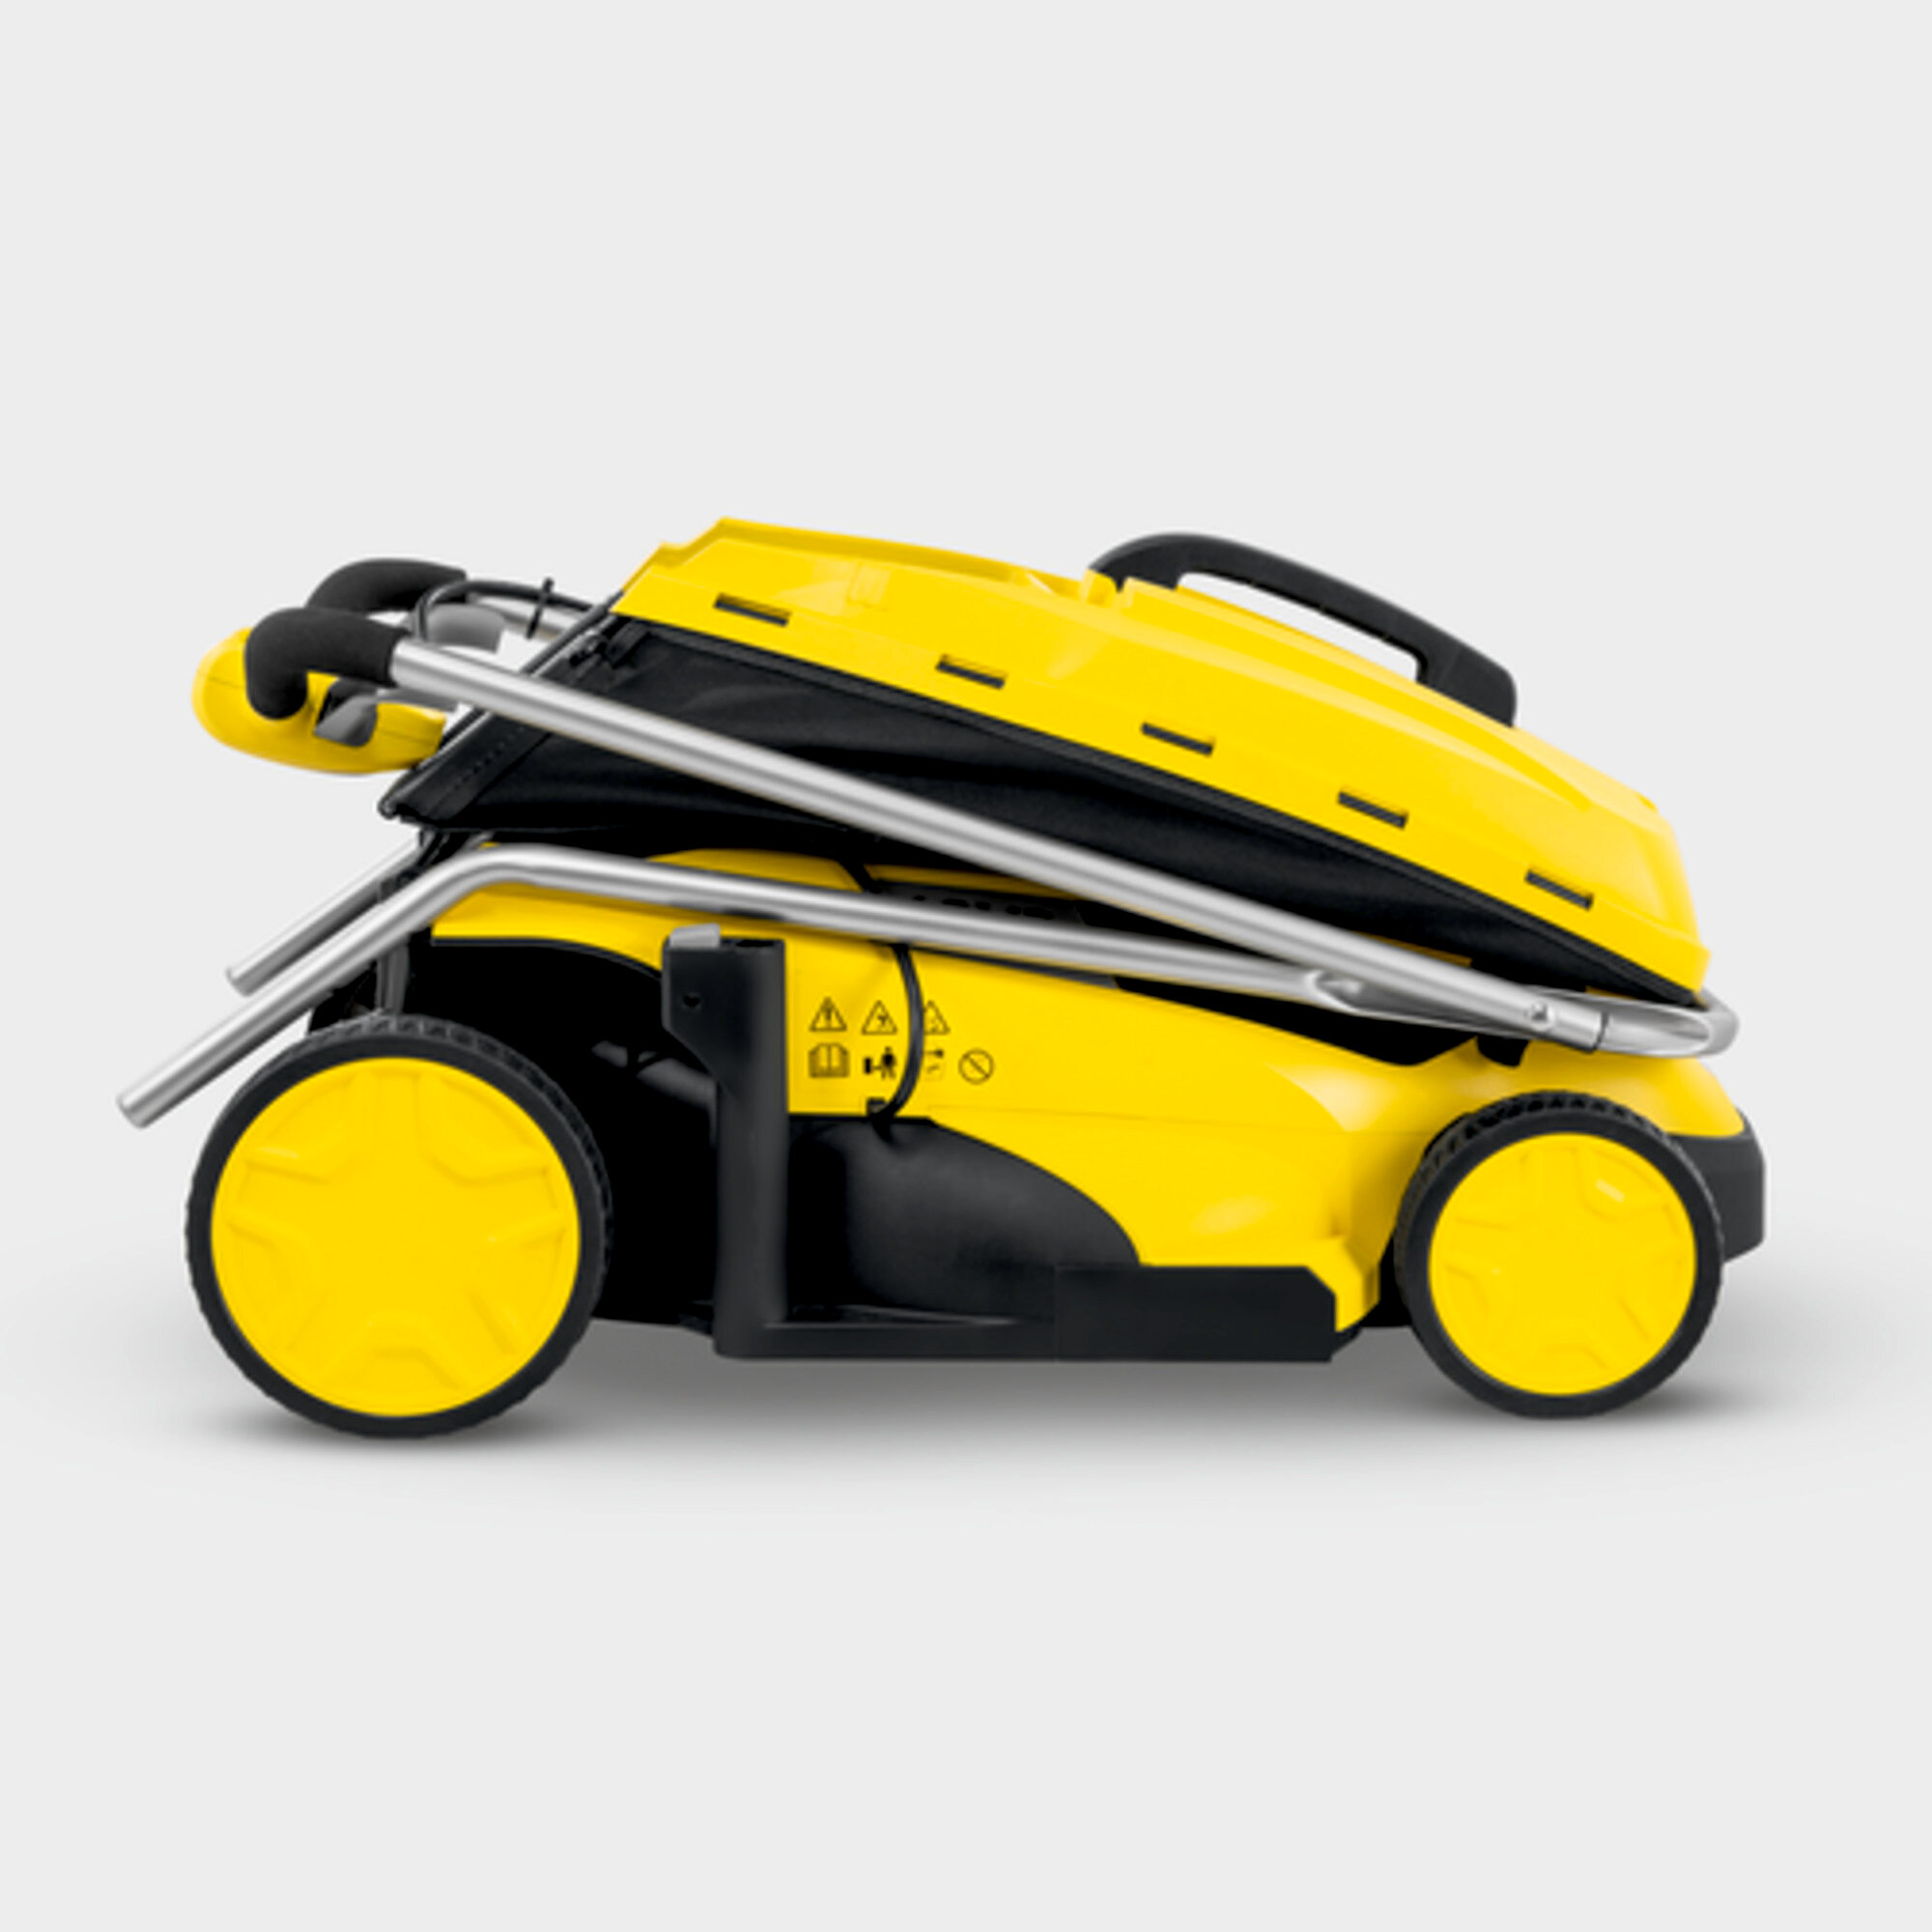 Battery lawn mower LMO 18-33 Cordless Lawn Mower (Machine Only): Space-saving storage design